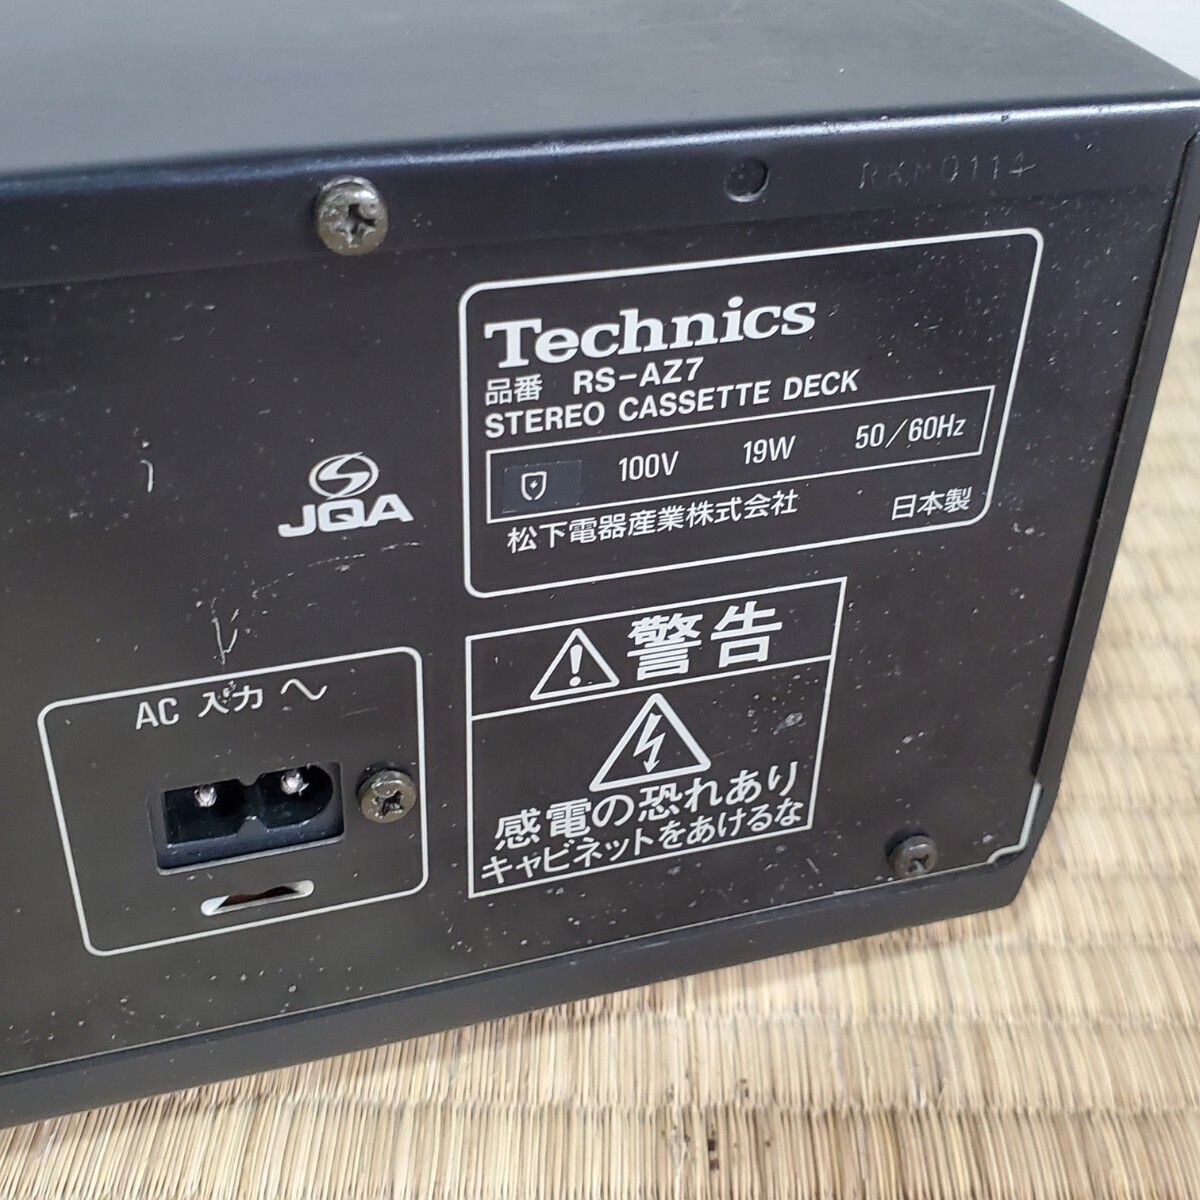 Technics Technics стерео кассетная дека электризация подтверждено RS-AZ7 звуковая аппаратура звук оборудование CLASS AA